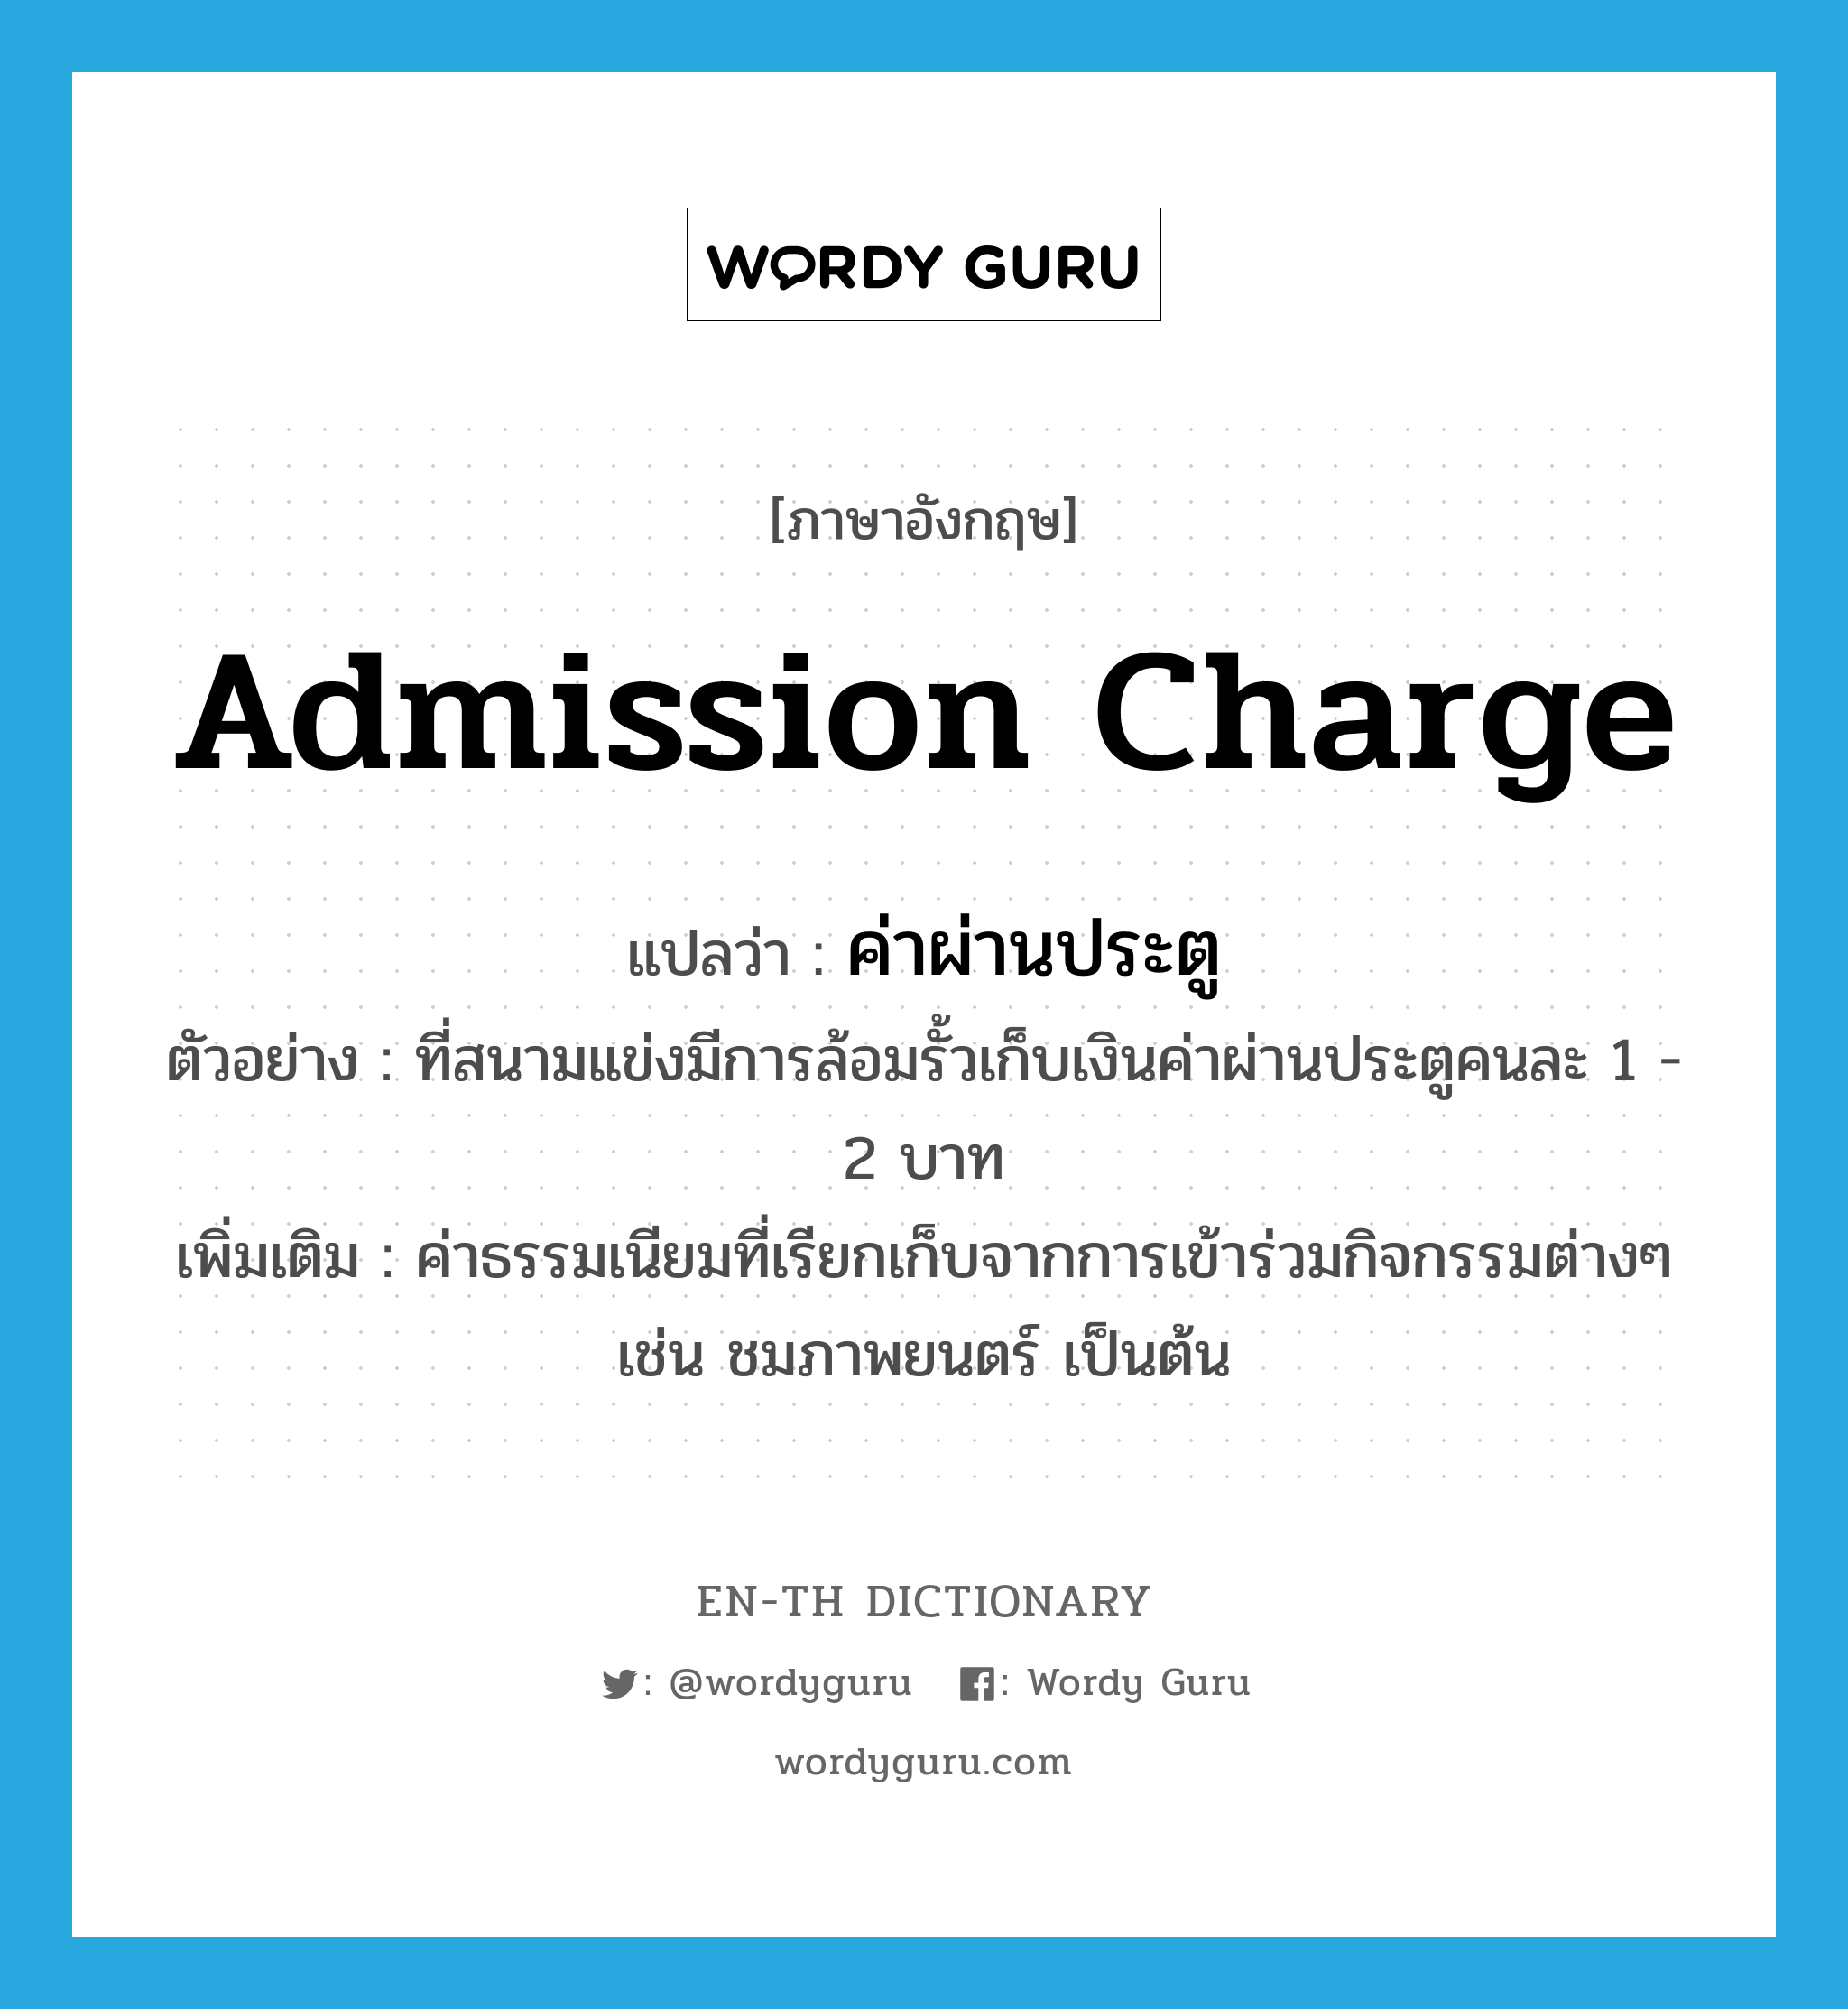 admission charge แปลว่า?, คำศัพท์ภาษาอังกฤษ admission charge แปลว่า ค่าผ่านประตู ประเภท N ตัวอย่าง ที่สนามแข่งมีการล้อมรั้วเก็บเงินค่าผ่านประตูคนละ 1 - 2 บาท เพิ่มเติม ค่าธรรมเนียมที่เรียกเก็บจากการเข้าร่วมกิจกรรมต่างๆ เช่น ชมภาพยนตร์ เป็นต้น หมวด N